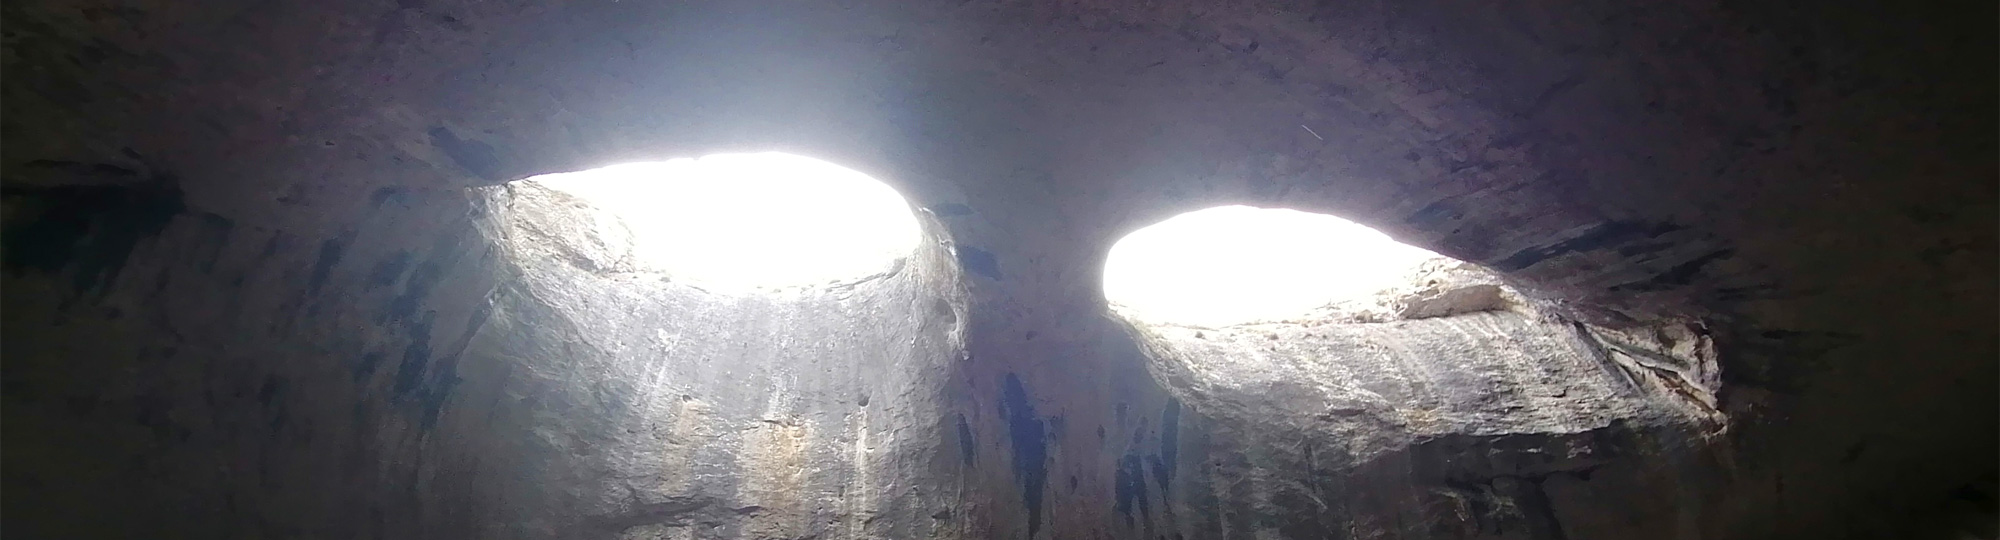 Grotte de Prohodna